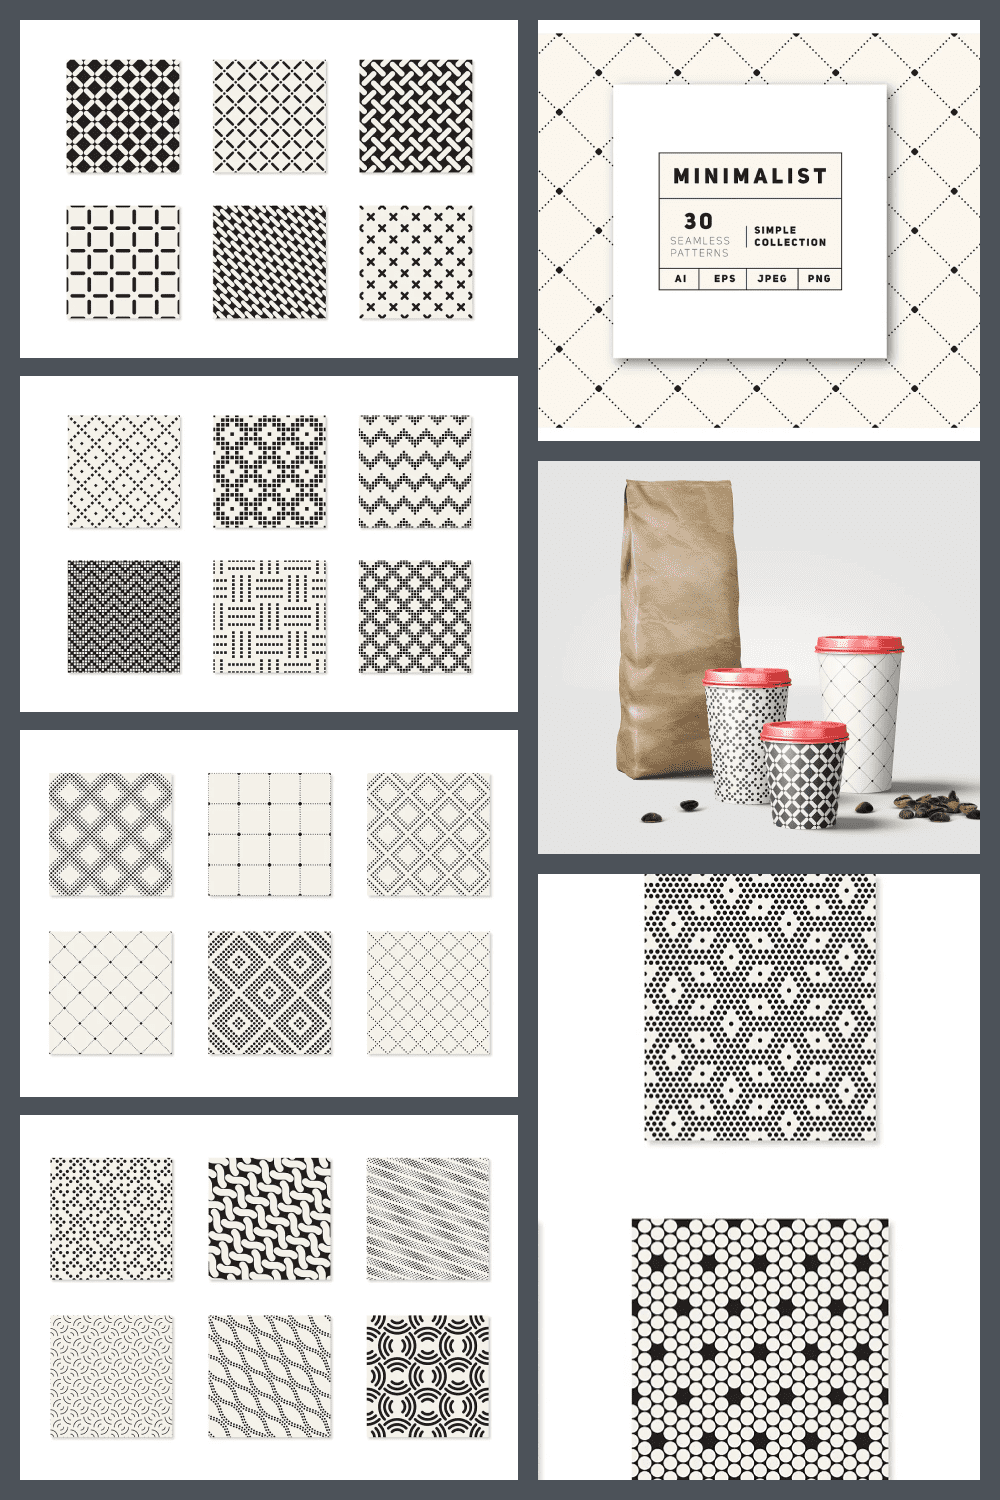 Gucci Seamless Patterns, Vol. 3: Rhombus by itsfarahbakhsh on